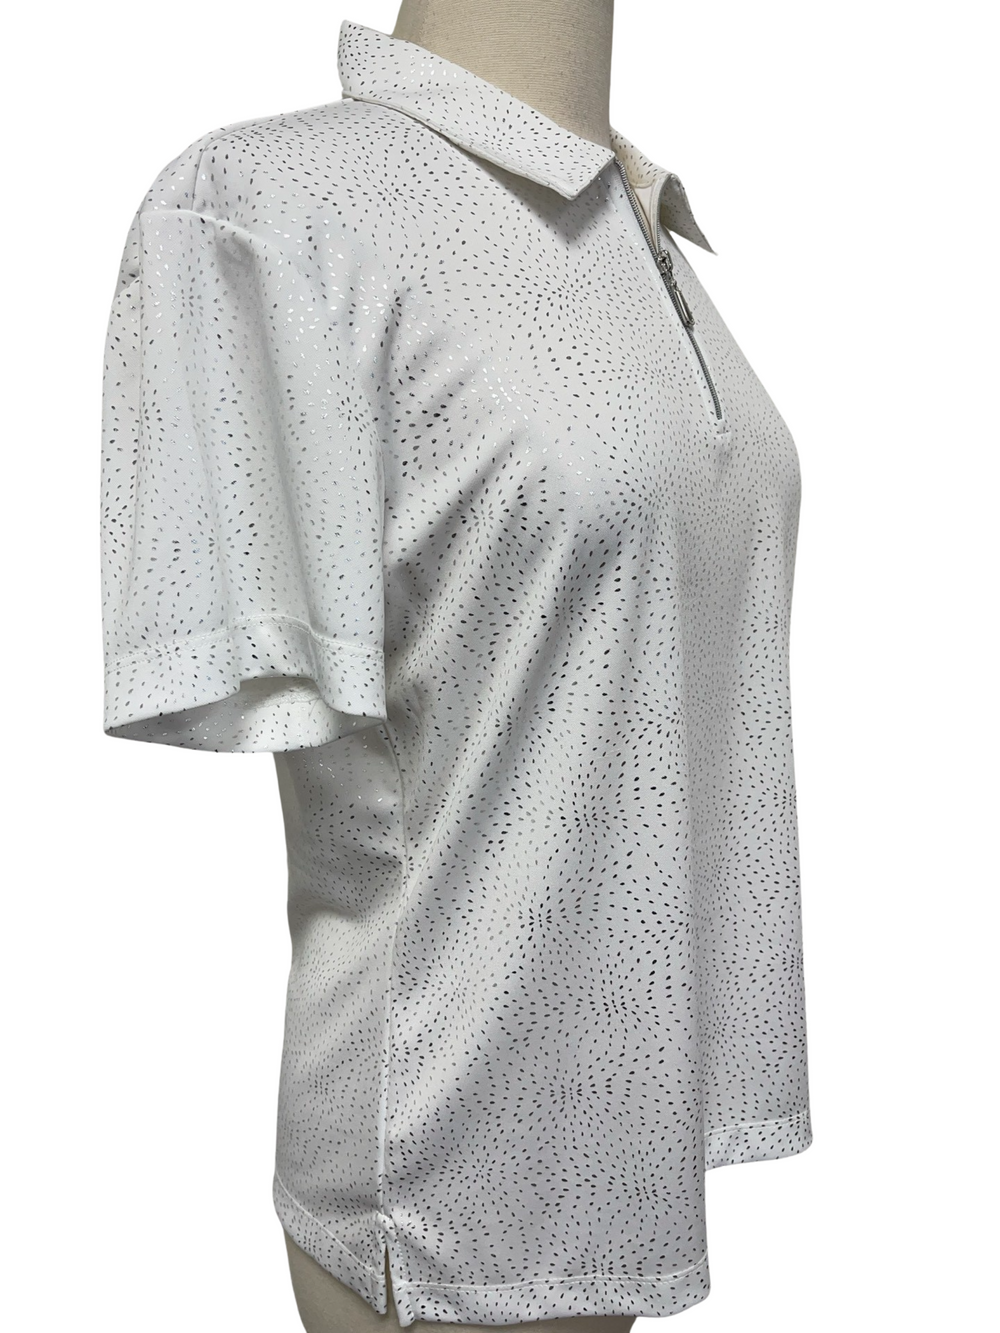 Monterey Club Short Sleeve Top - White/Silver - Size Large - Skorzie